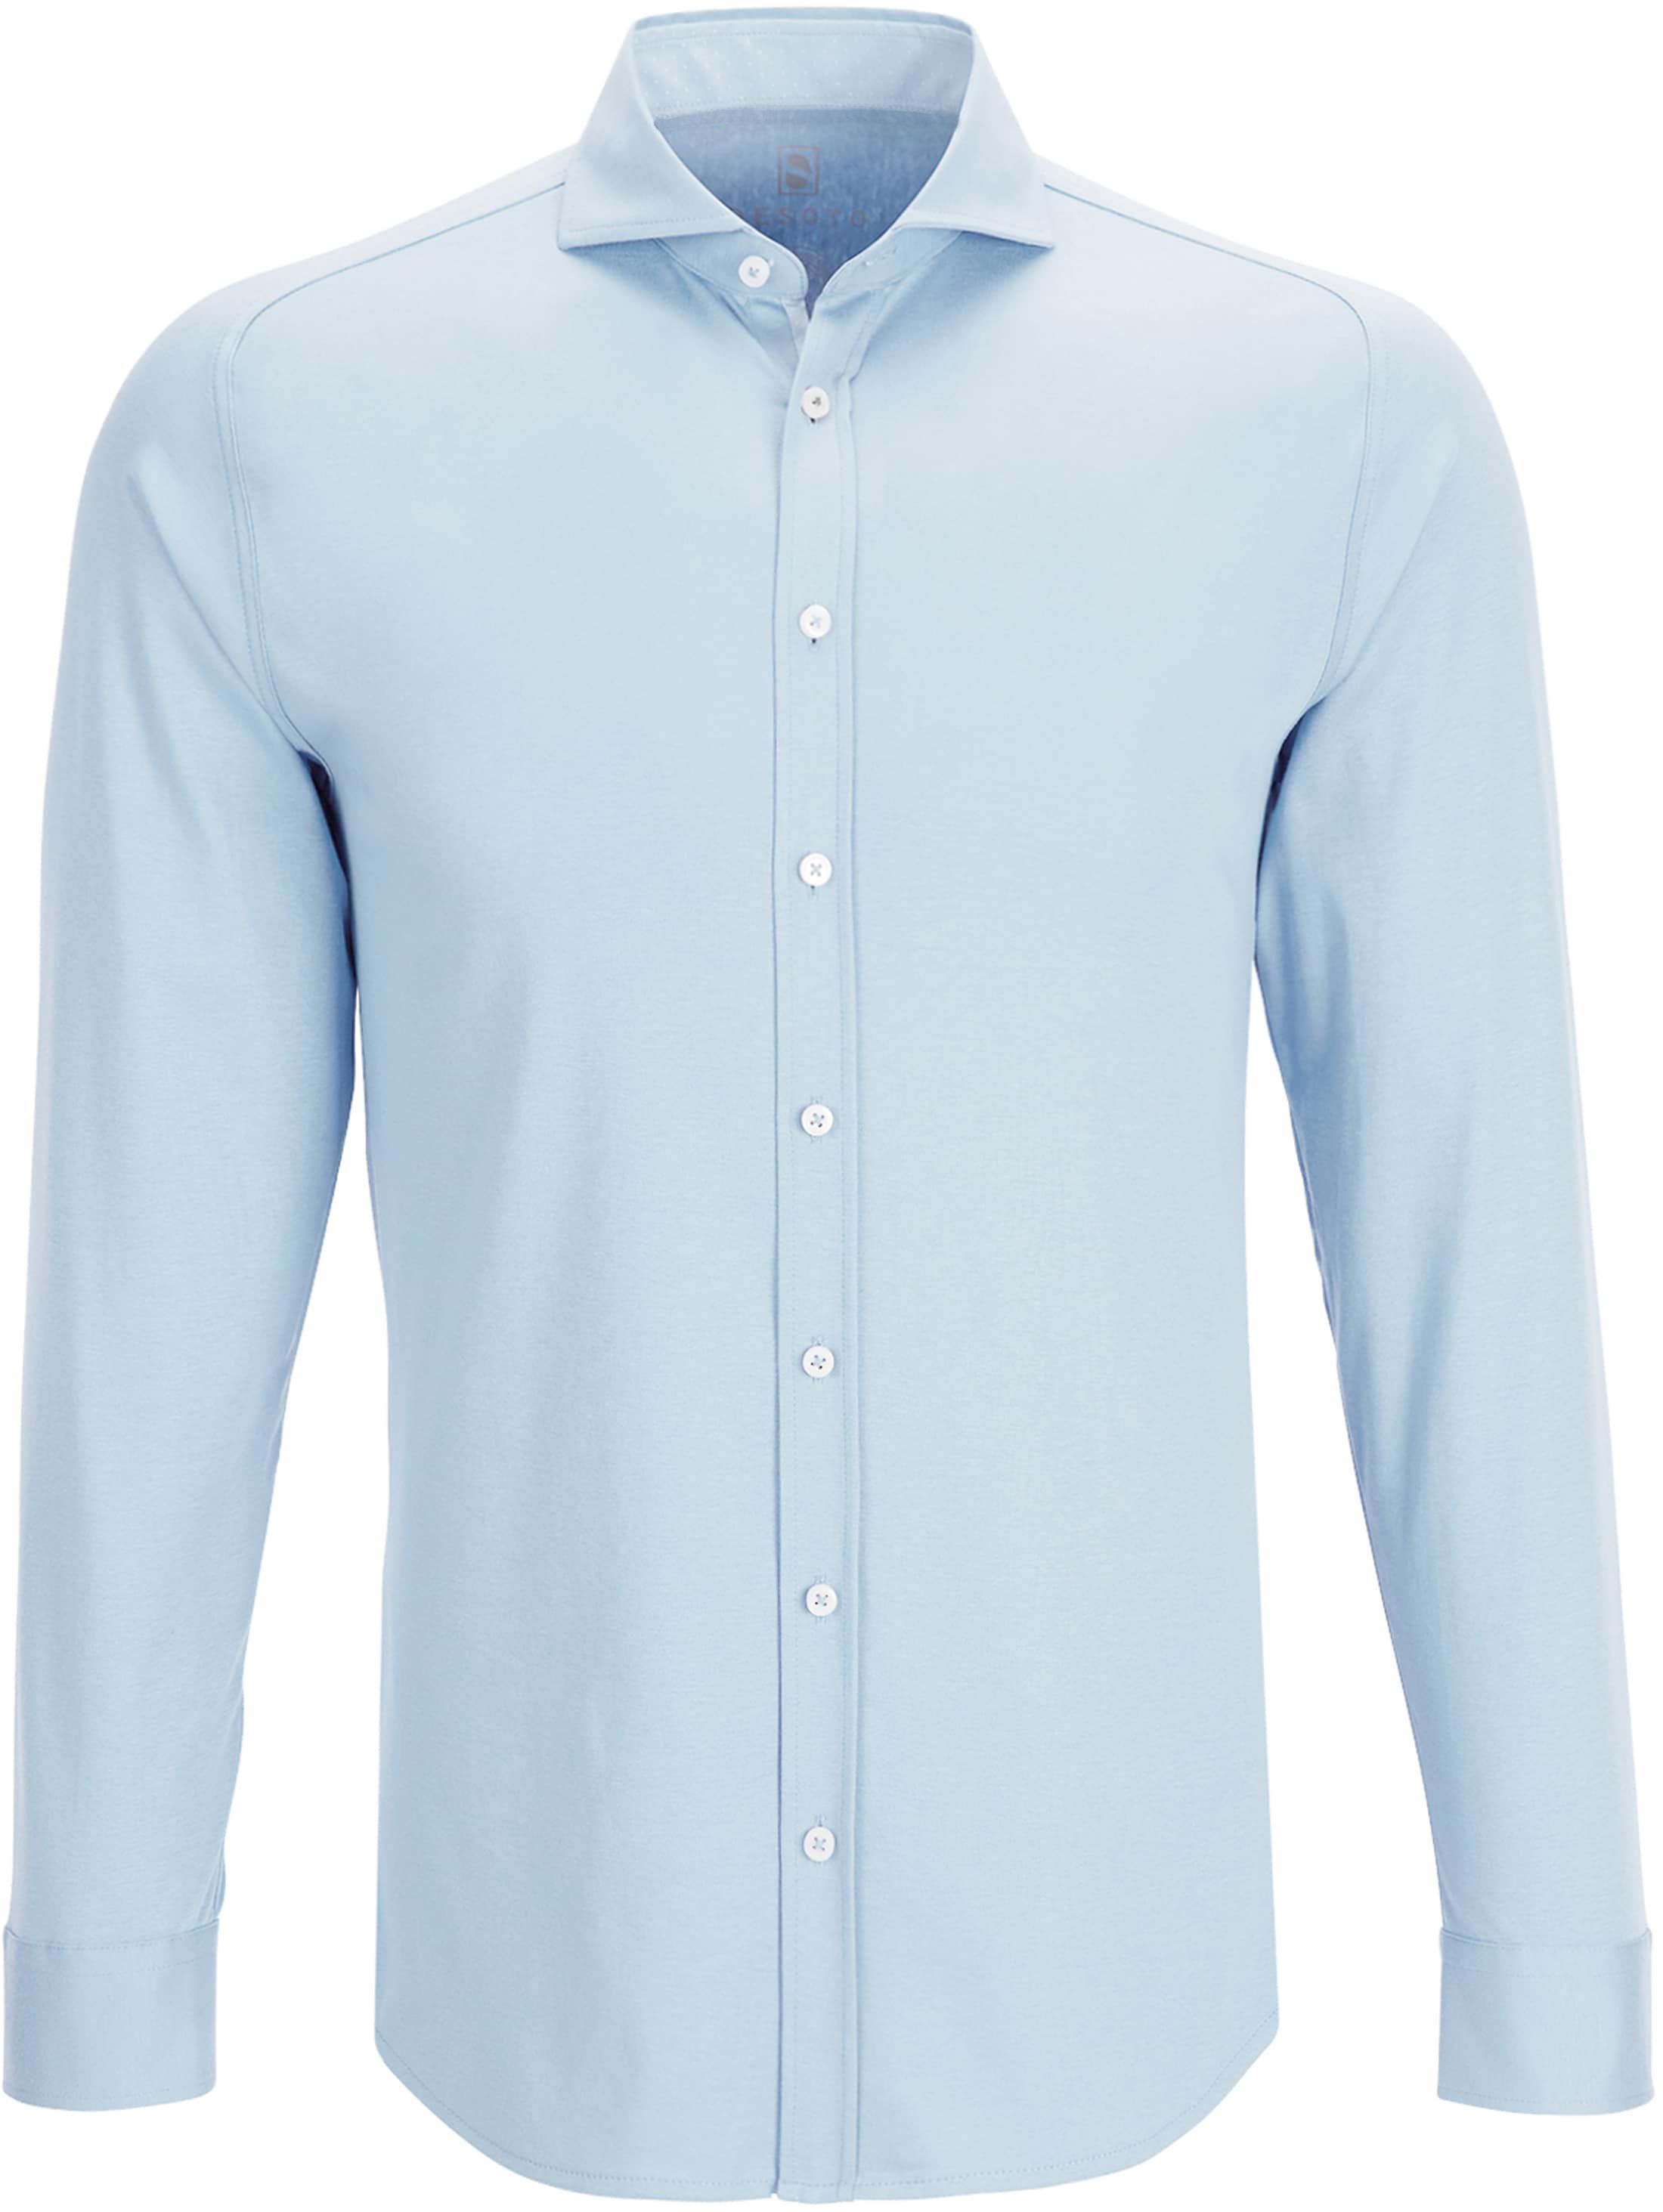 Desoto Shirt Non Iron Light 051 Blue size 3XL